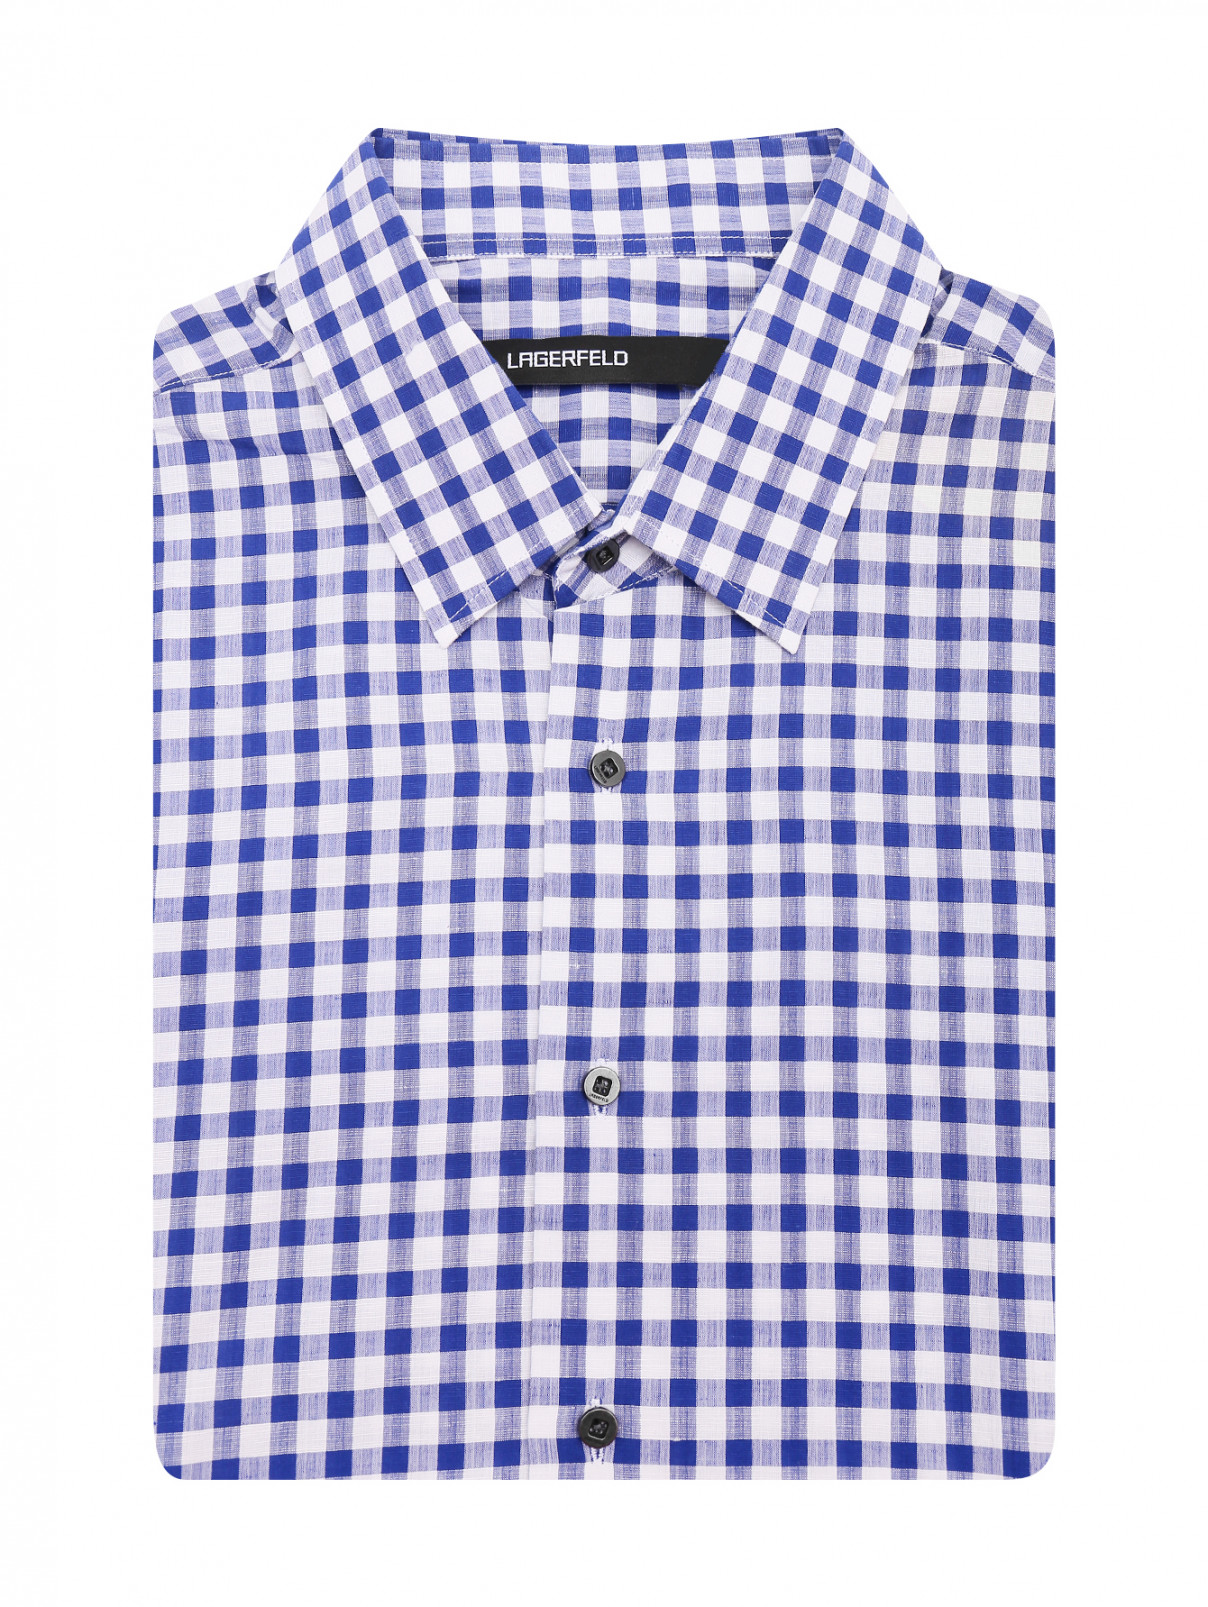 Рубашка из хлопка с узором Lagerfeld  –  Общий вид  – Цвет:  Узор